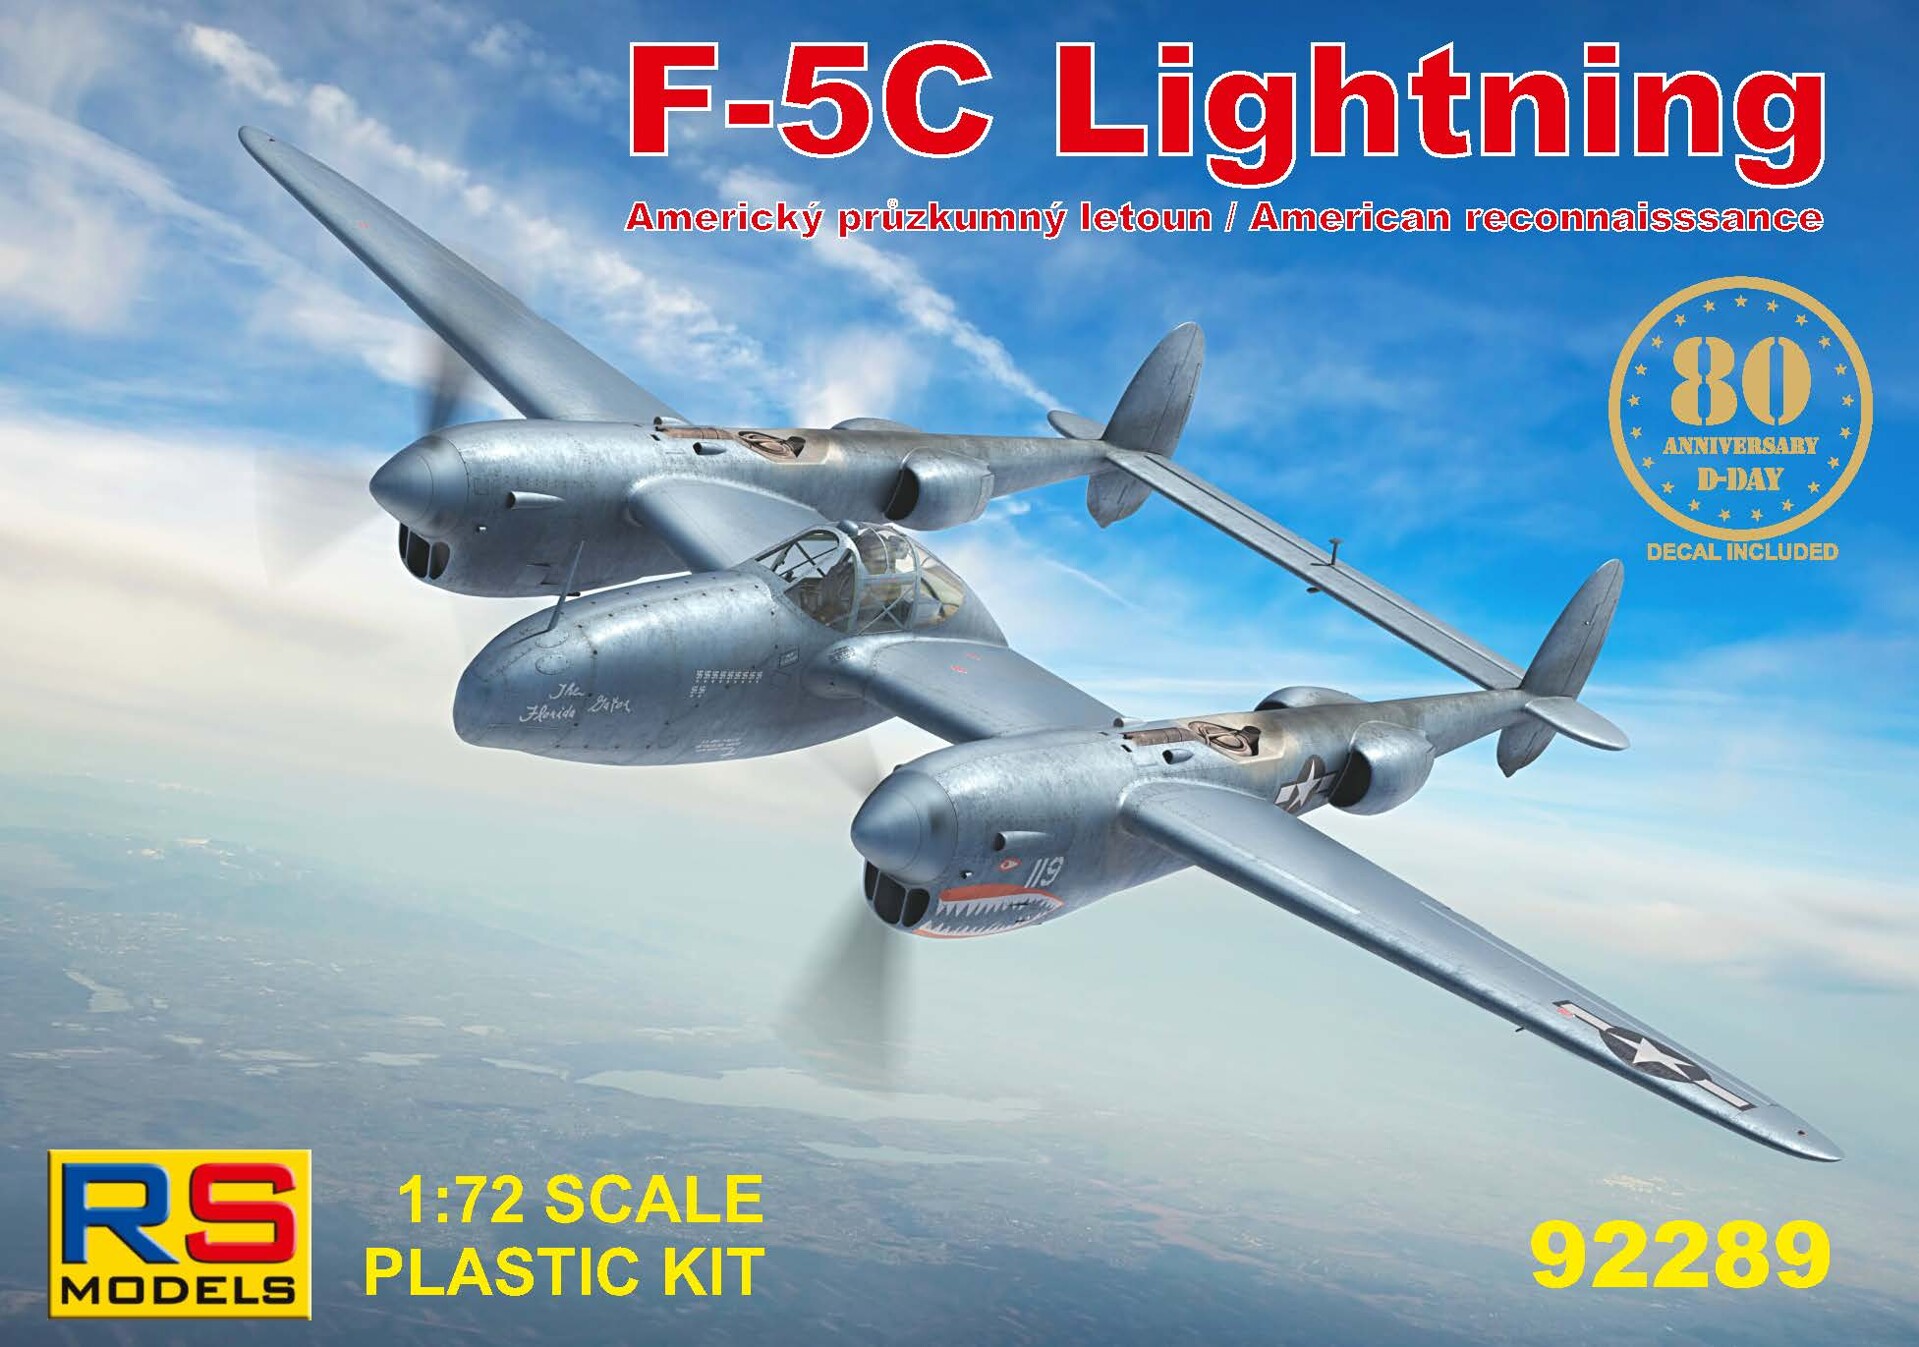 92289 F-5C Lightning